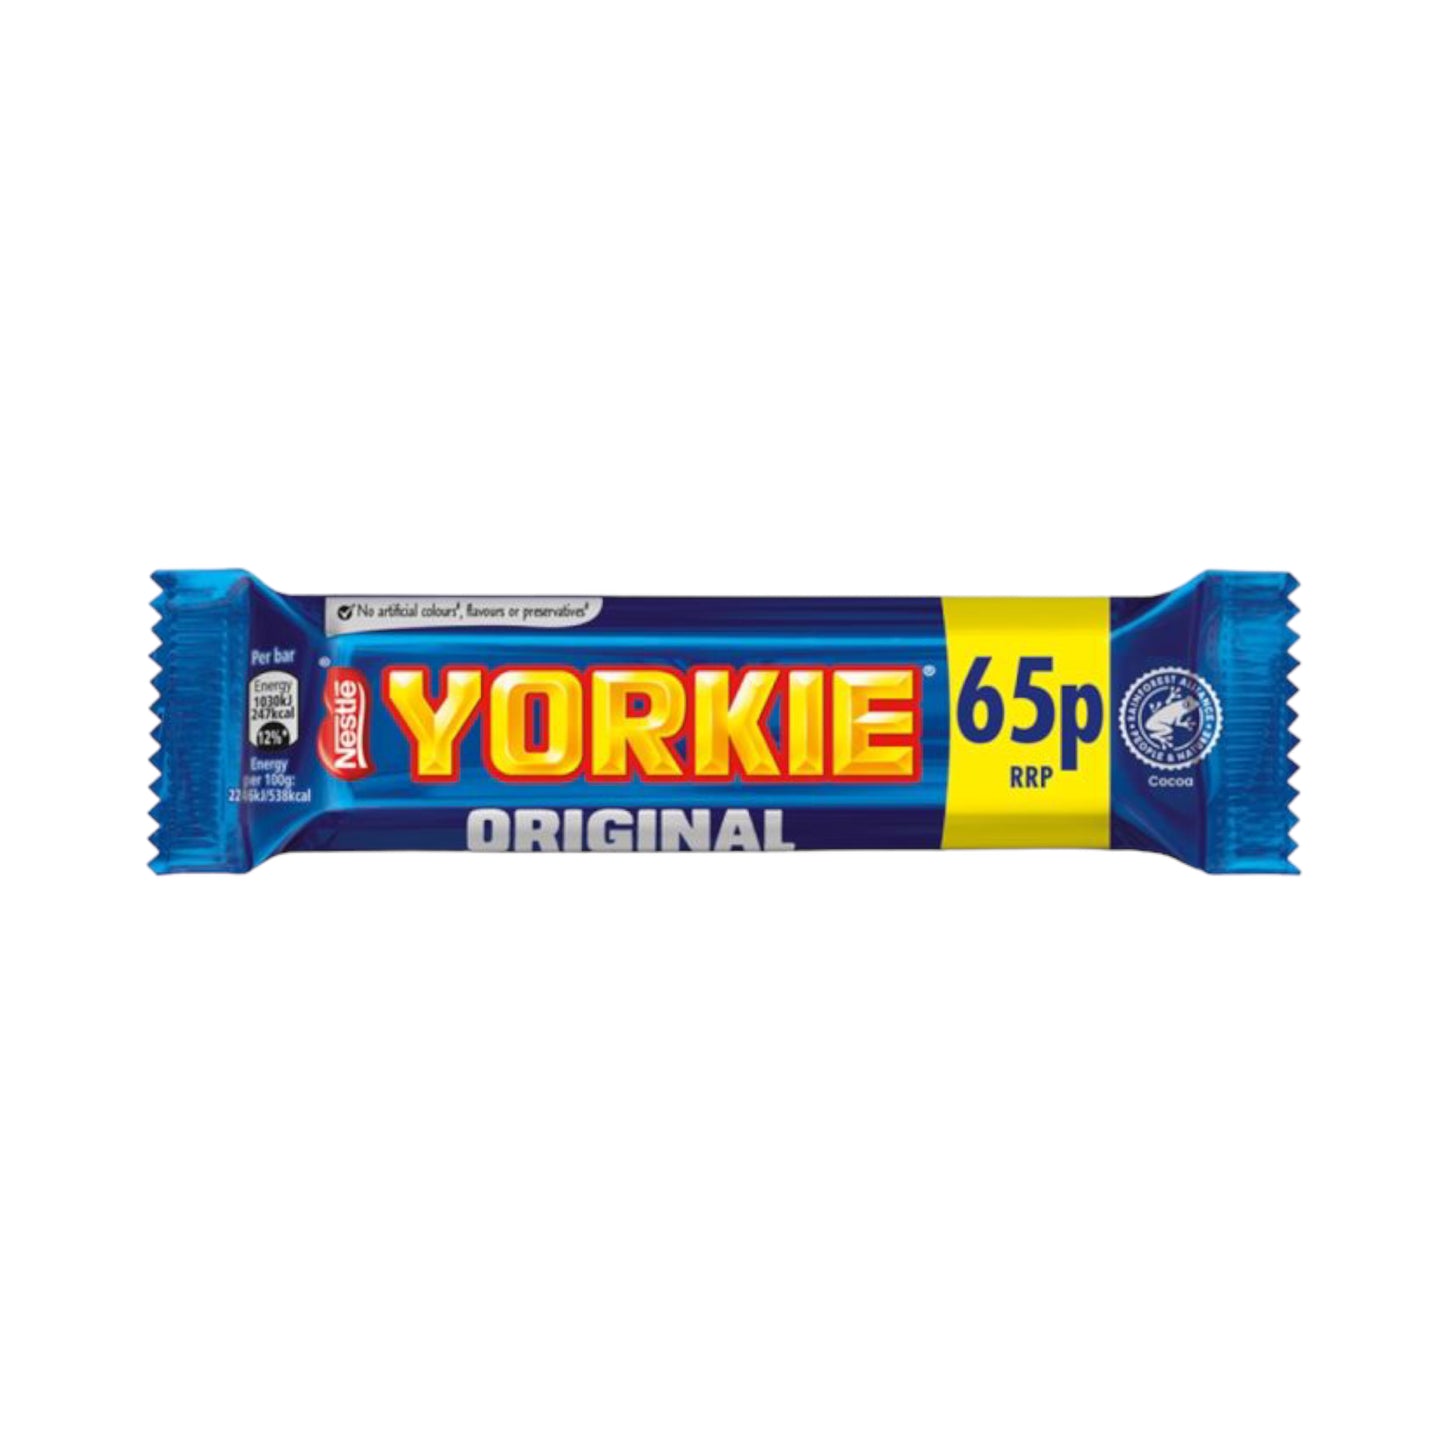 Yorkie Milk Chocolate Bar - 46g (65p PMP)